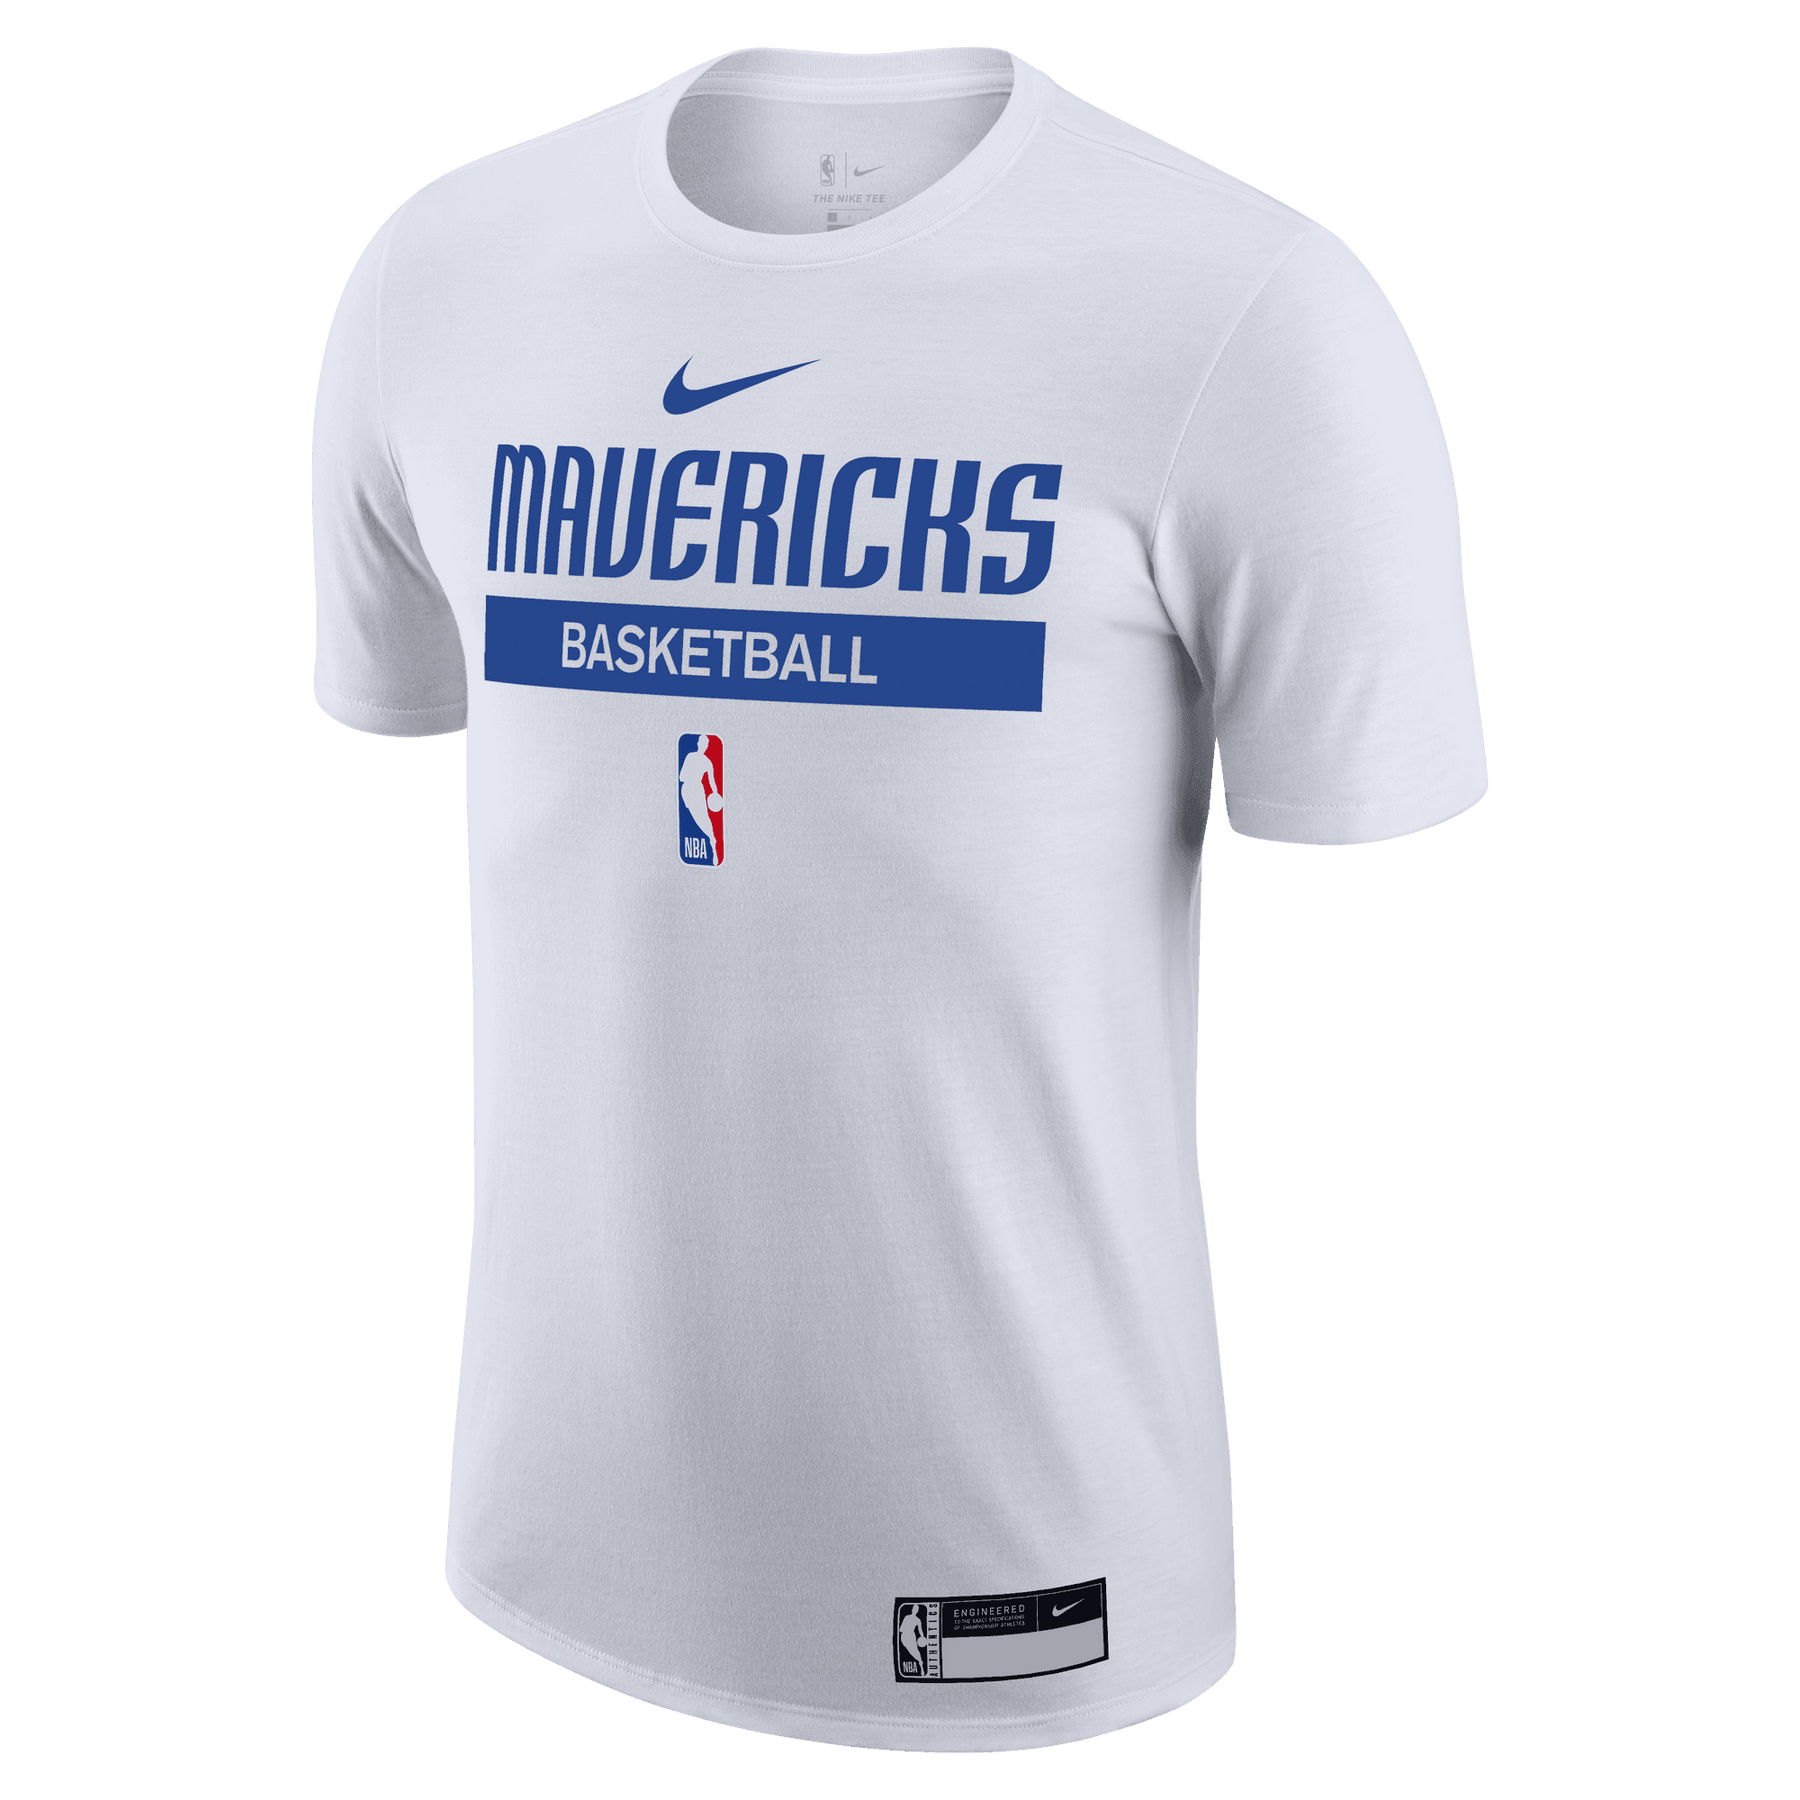 Cheap Dallas Mavericks Apparel, Discount Mavericks Gear, NBA Mavericks  Merchandise On Sale